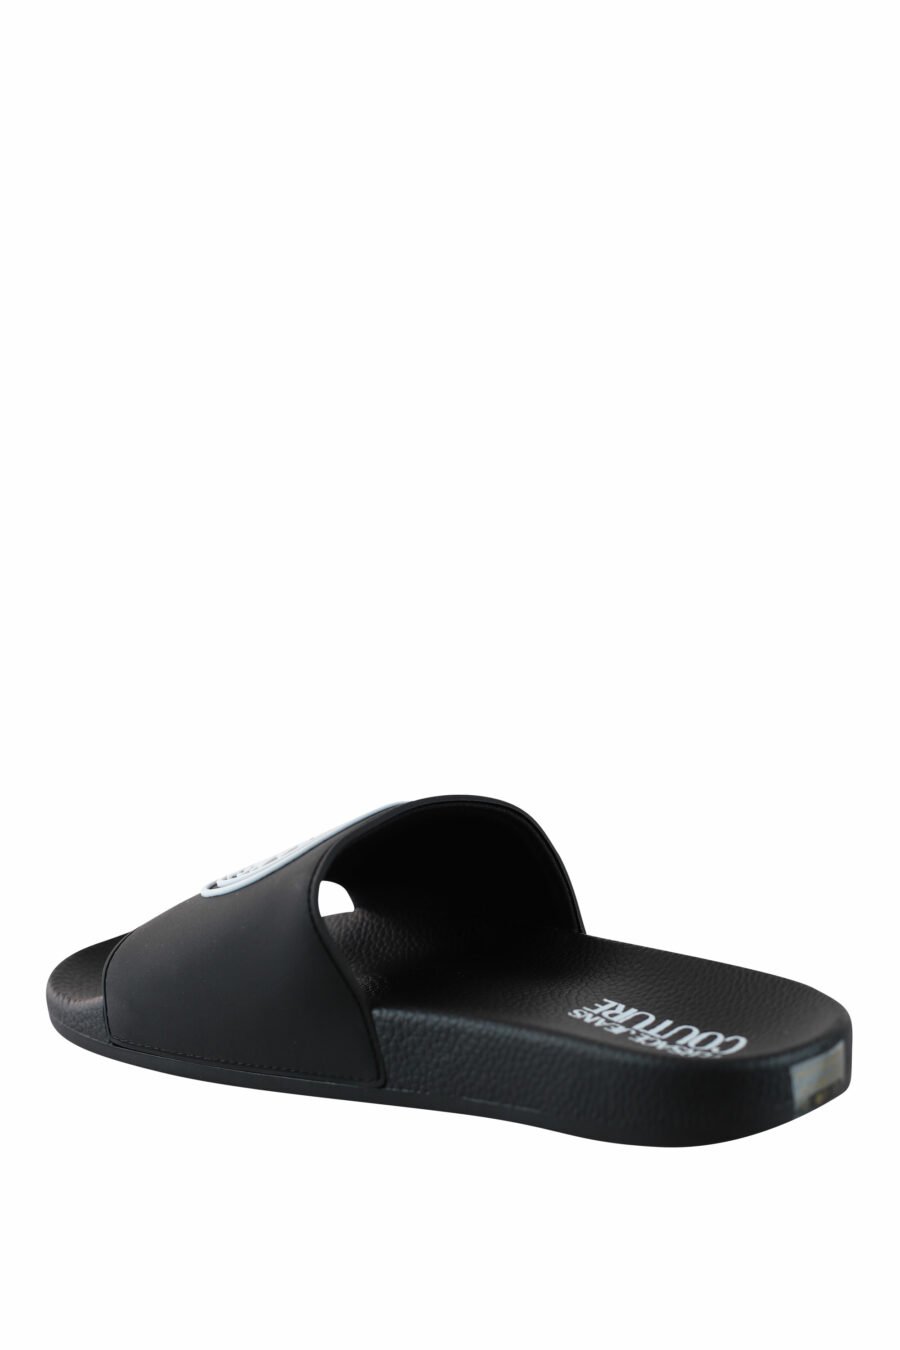 Black flip flops with black circular maxilogo - IMG 4428